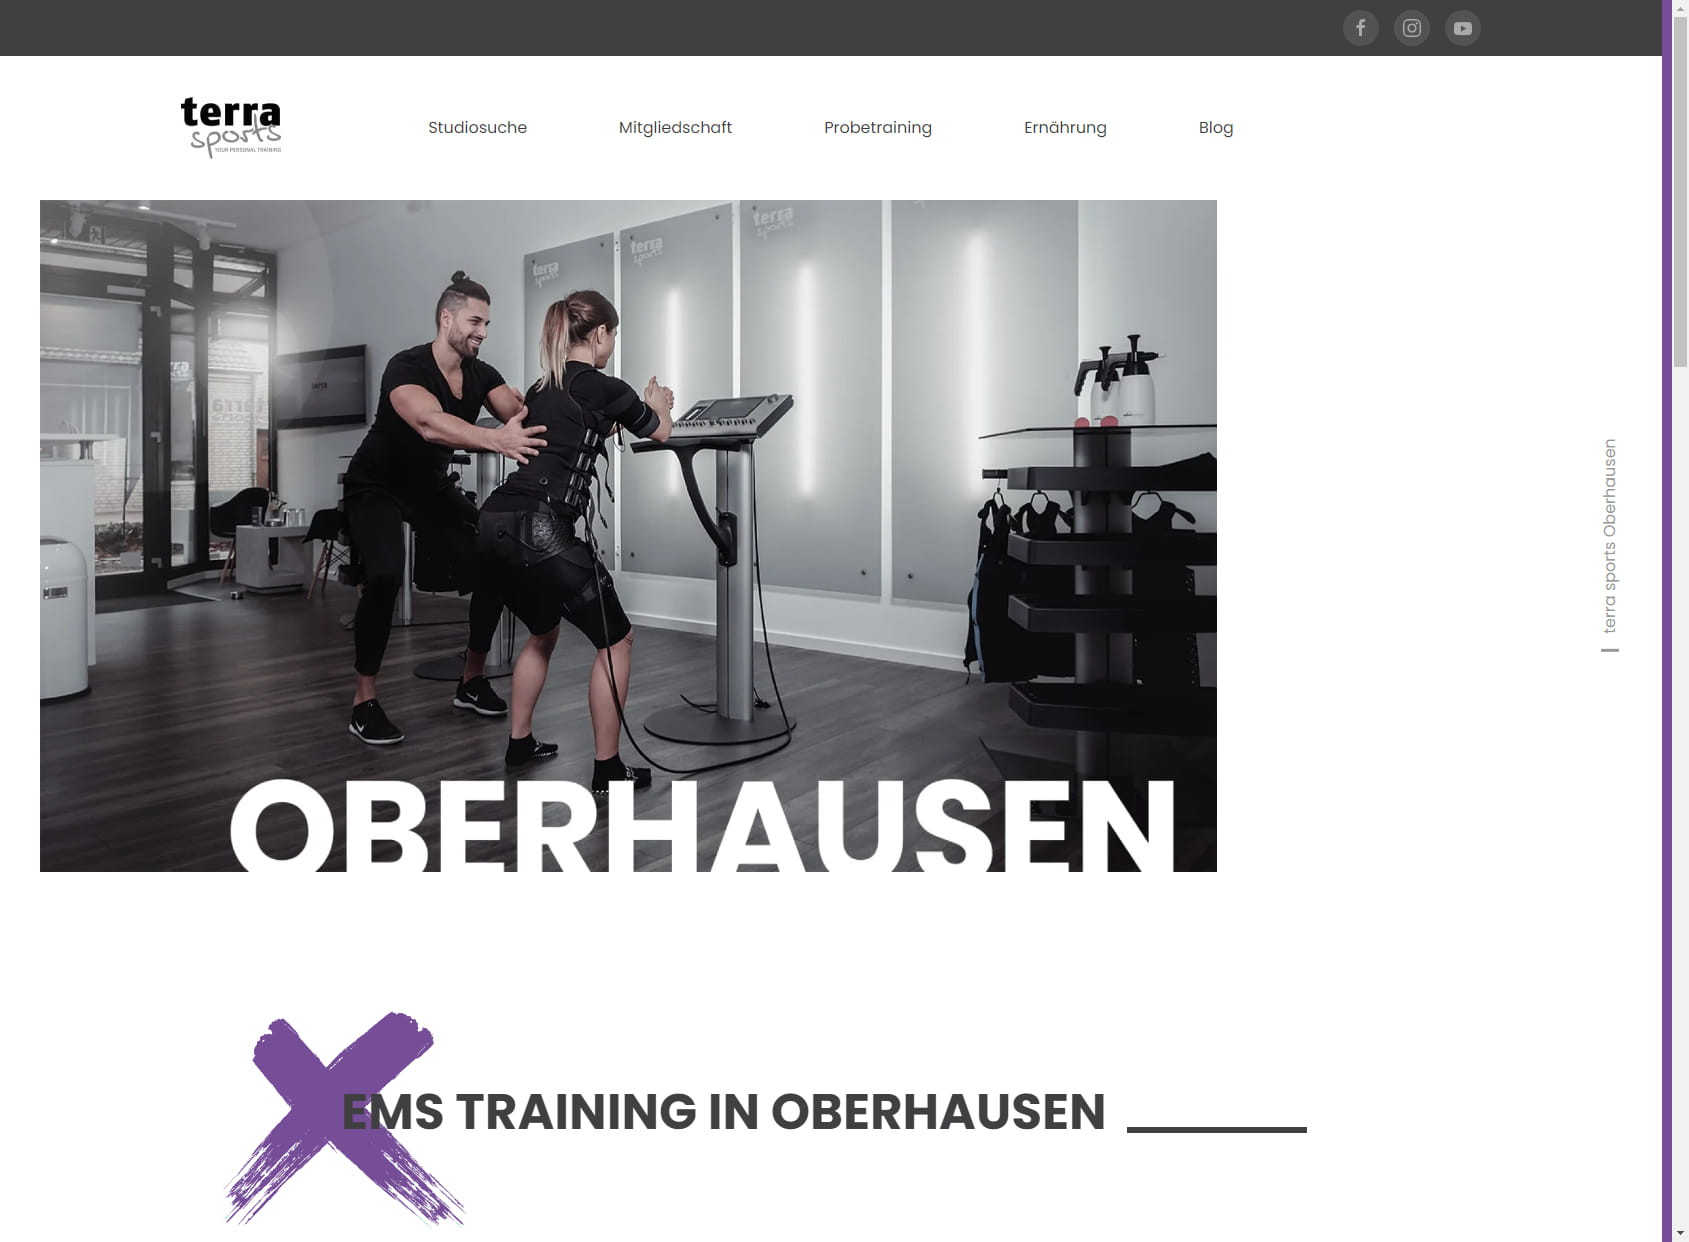 terra sports Oberhausen - EMS Training